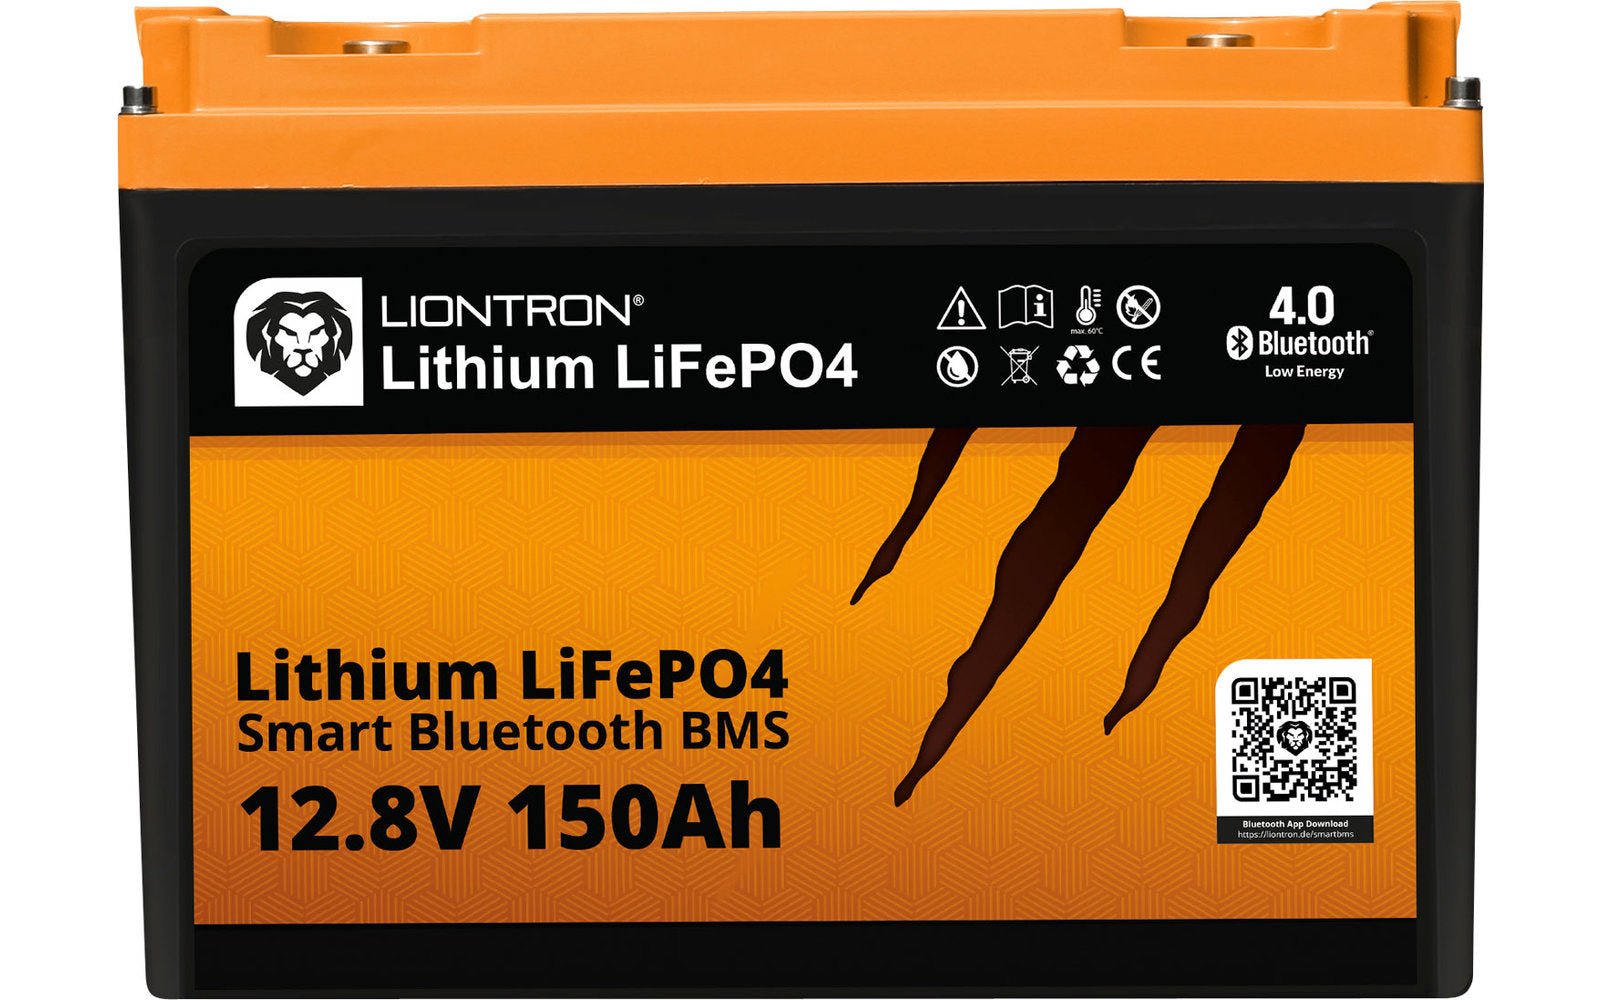 Acumulator pe baza de litiu (LiFePo4) LIONTRON Smart Bluetooth BMS 12.8V/150Ah - CampShop.ro